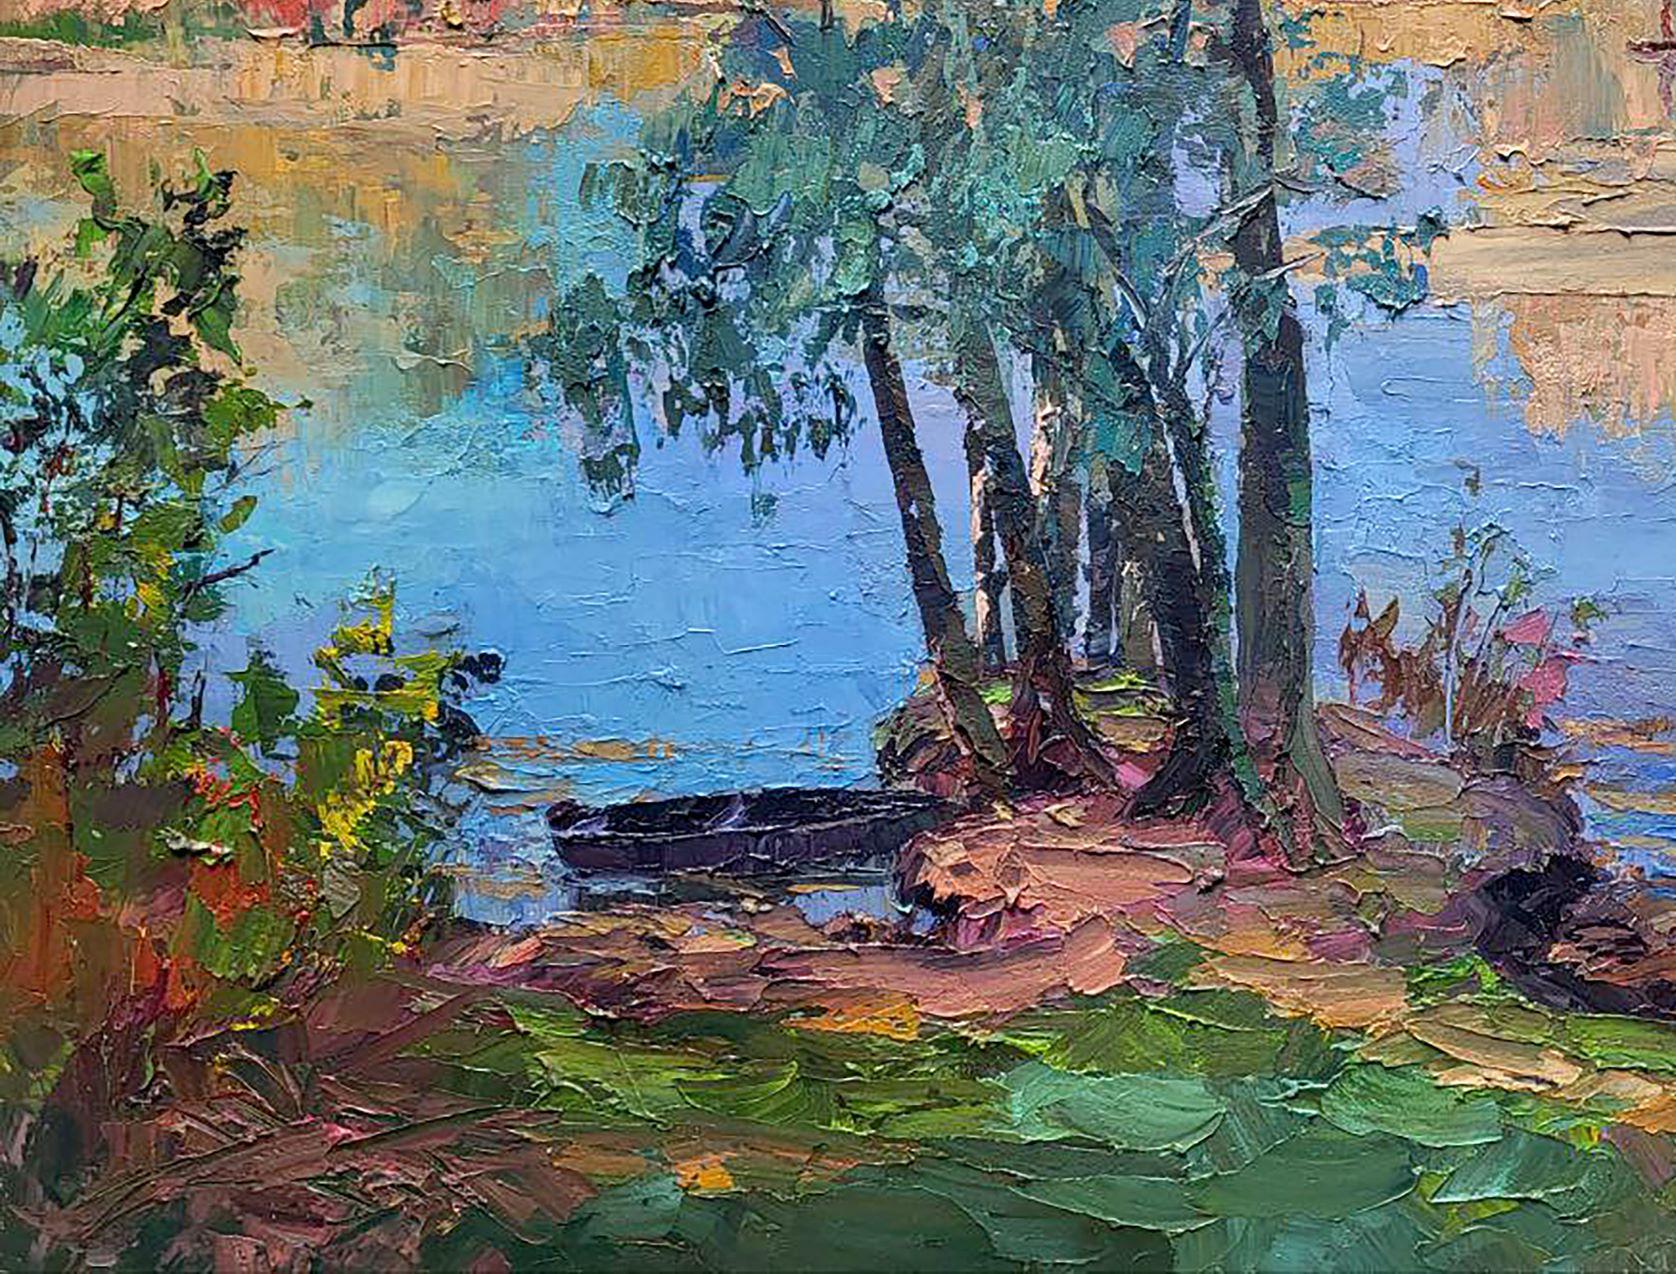 Artist: Boris Serdyuk 
Work: Original oil painting, handmade artwork, one of a kind 
Medium: Oil on Canvas
Style: Impressionism
Year: 2020
Title: Morning on the Lake
Size: 23.5